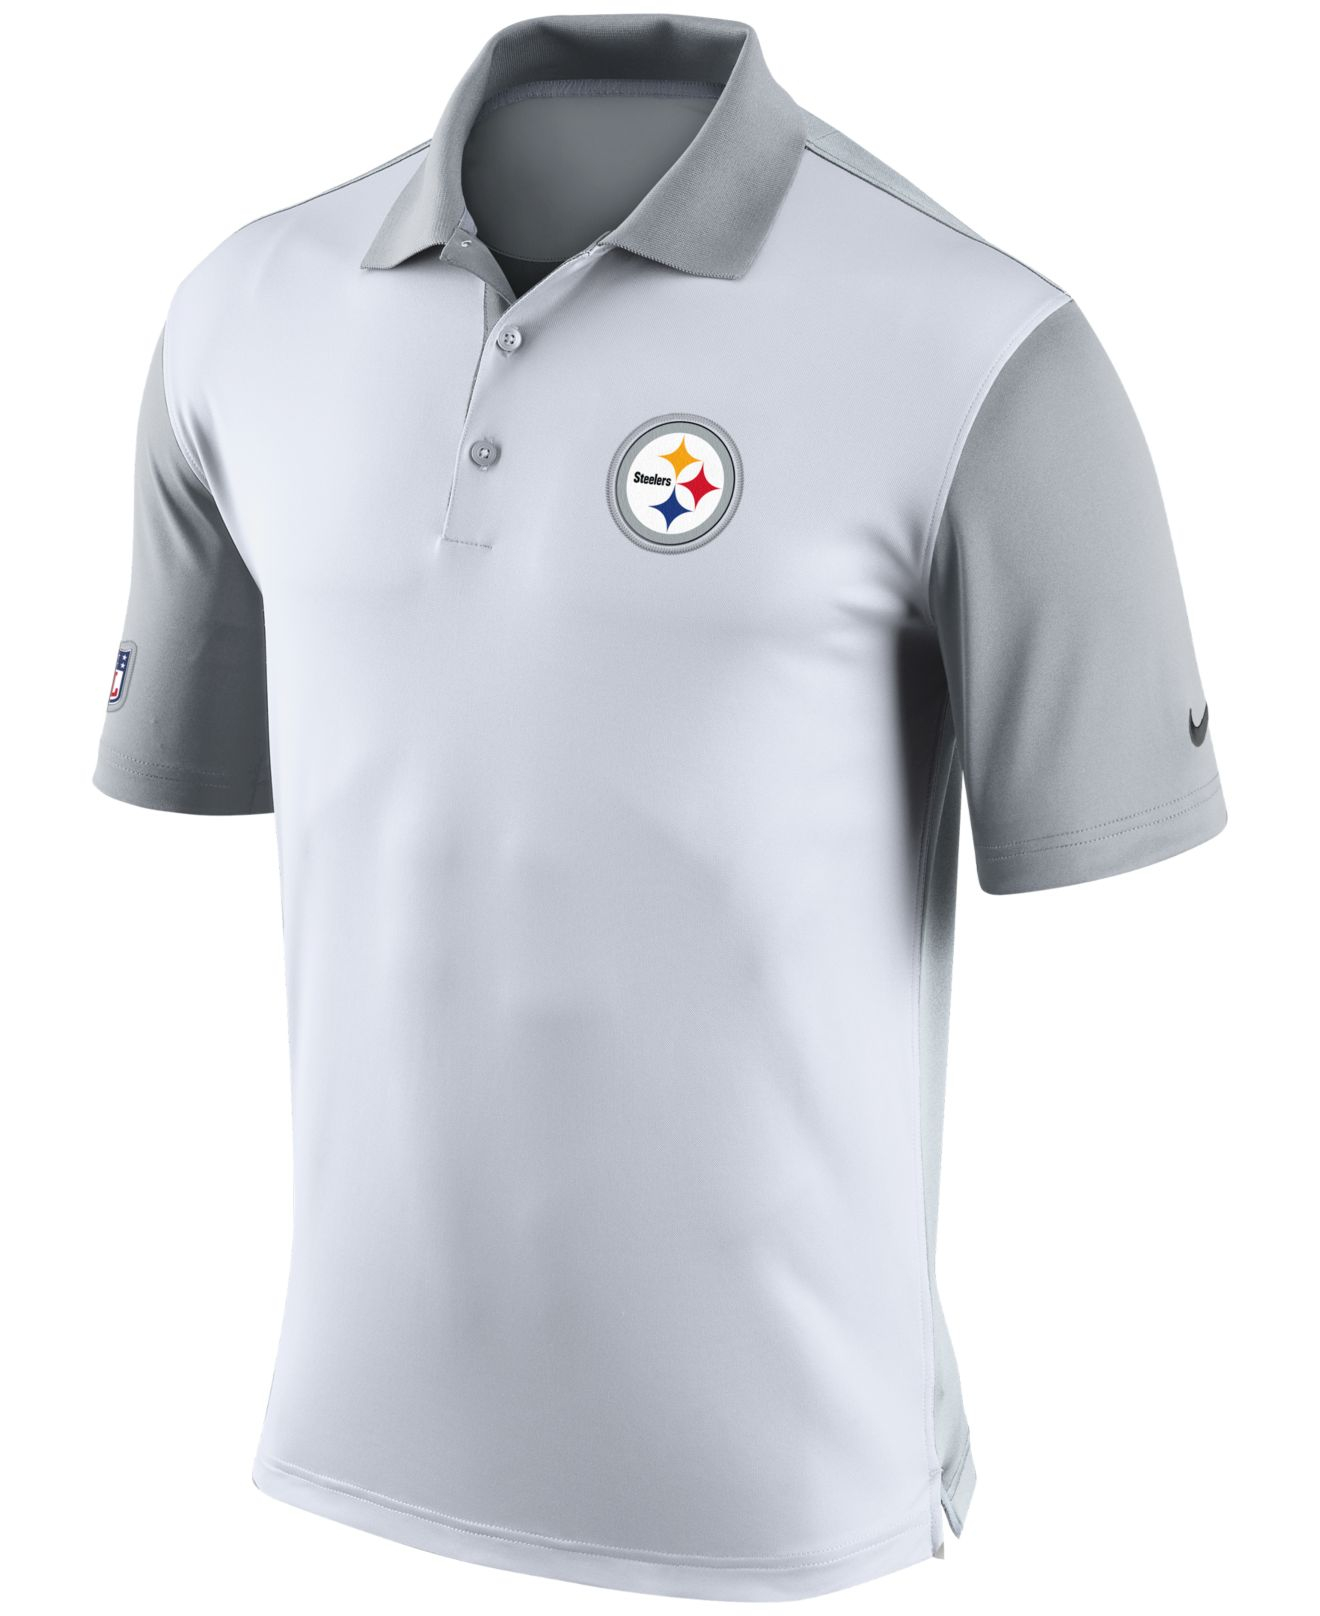 Lyst - Nike Men's Pittsburgh Steelers Preseason Polo in White for Men